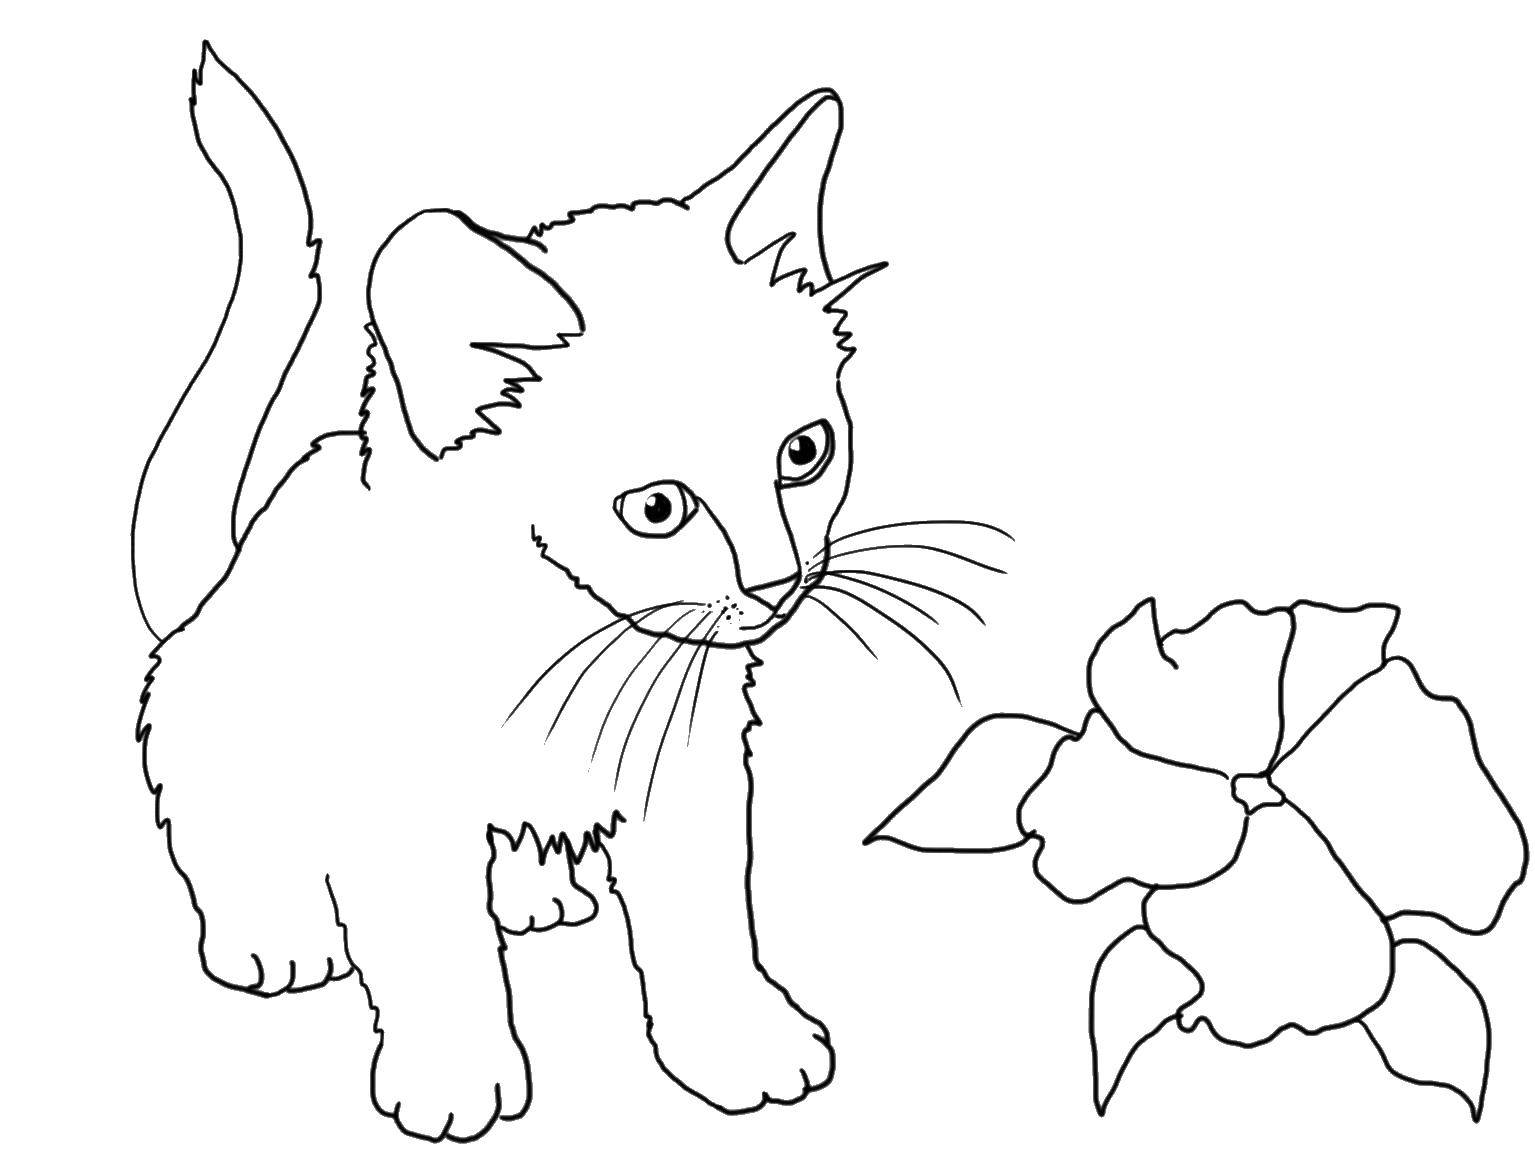 Название: Раскраска Котенок и цветок. Категория: Коты и котята. Теги: животные, котенок, кошка, цветок.